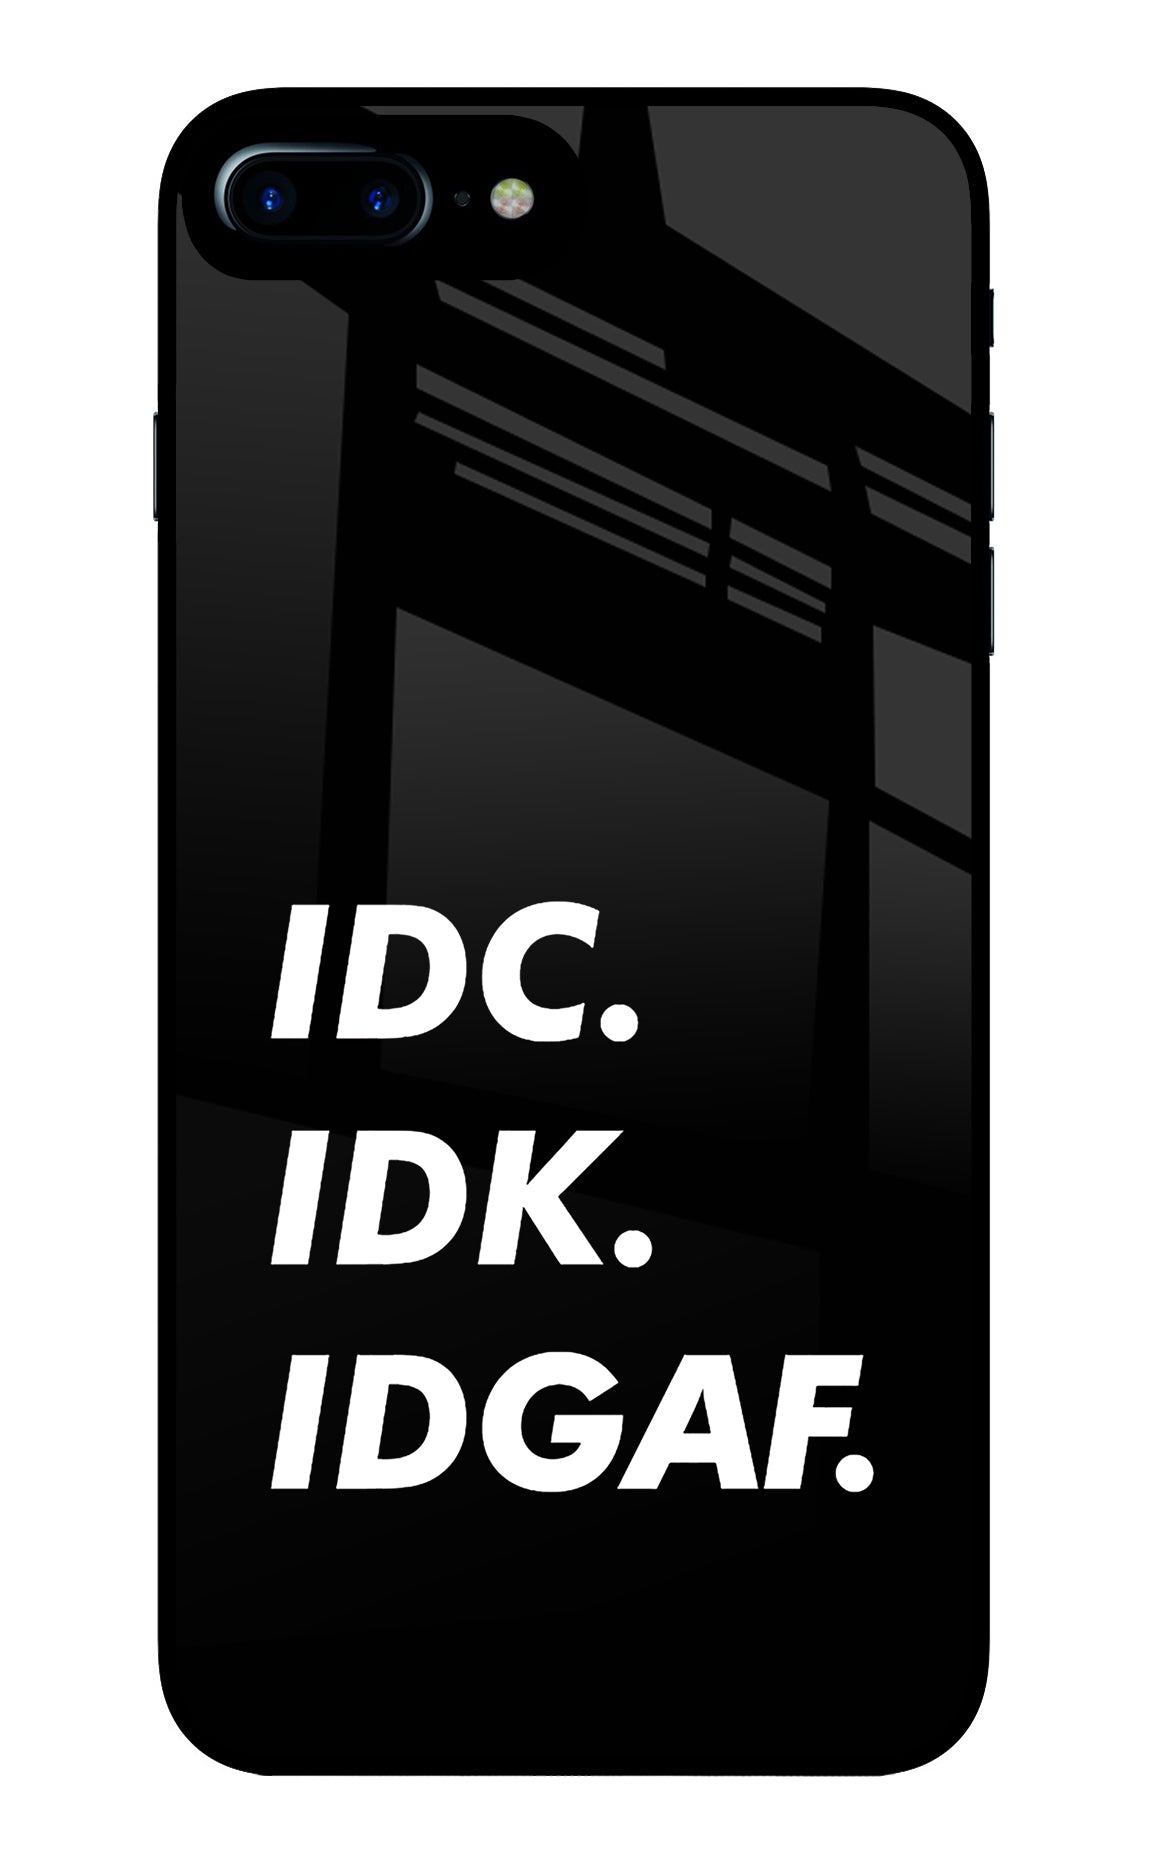 Idc Idk Idgaf iPhone 7 Plus Glass Case